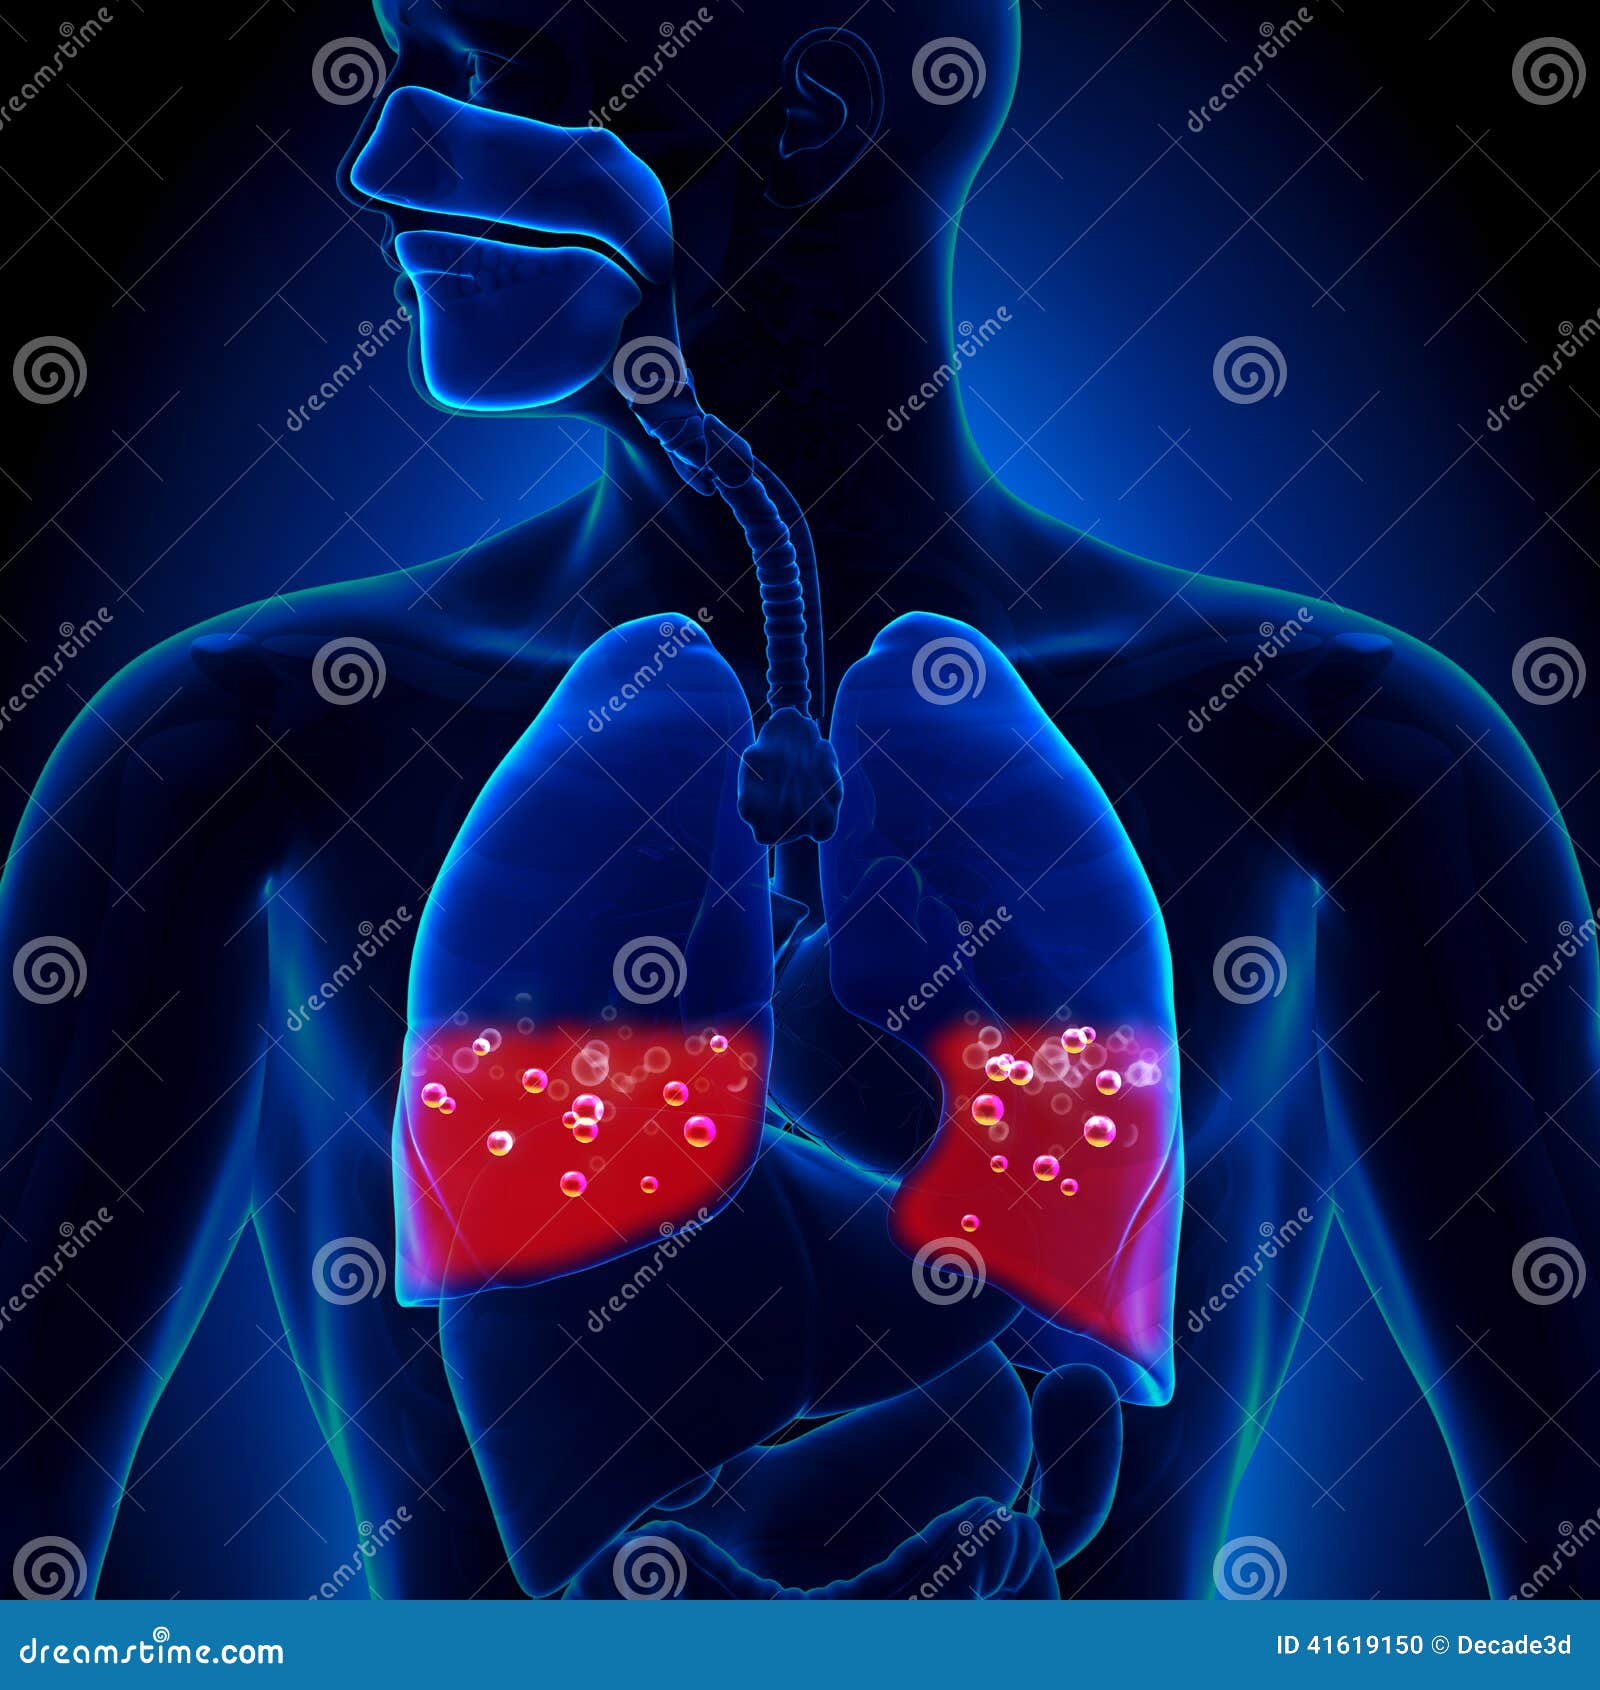 pulmonary edema - blood in lungs